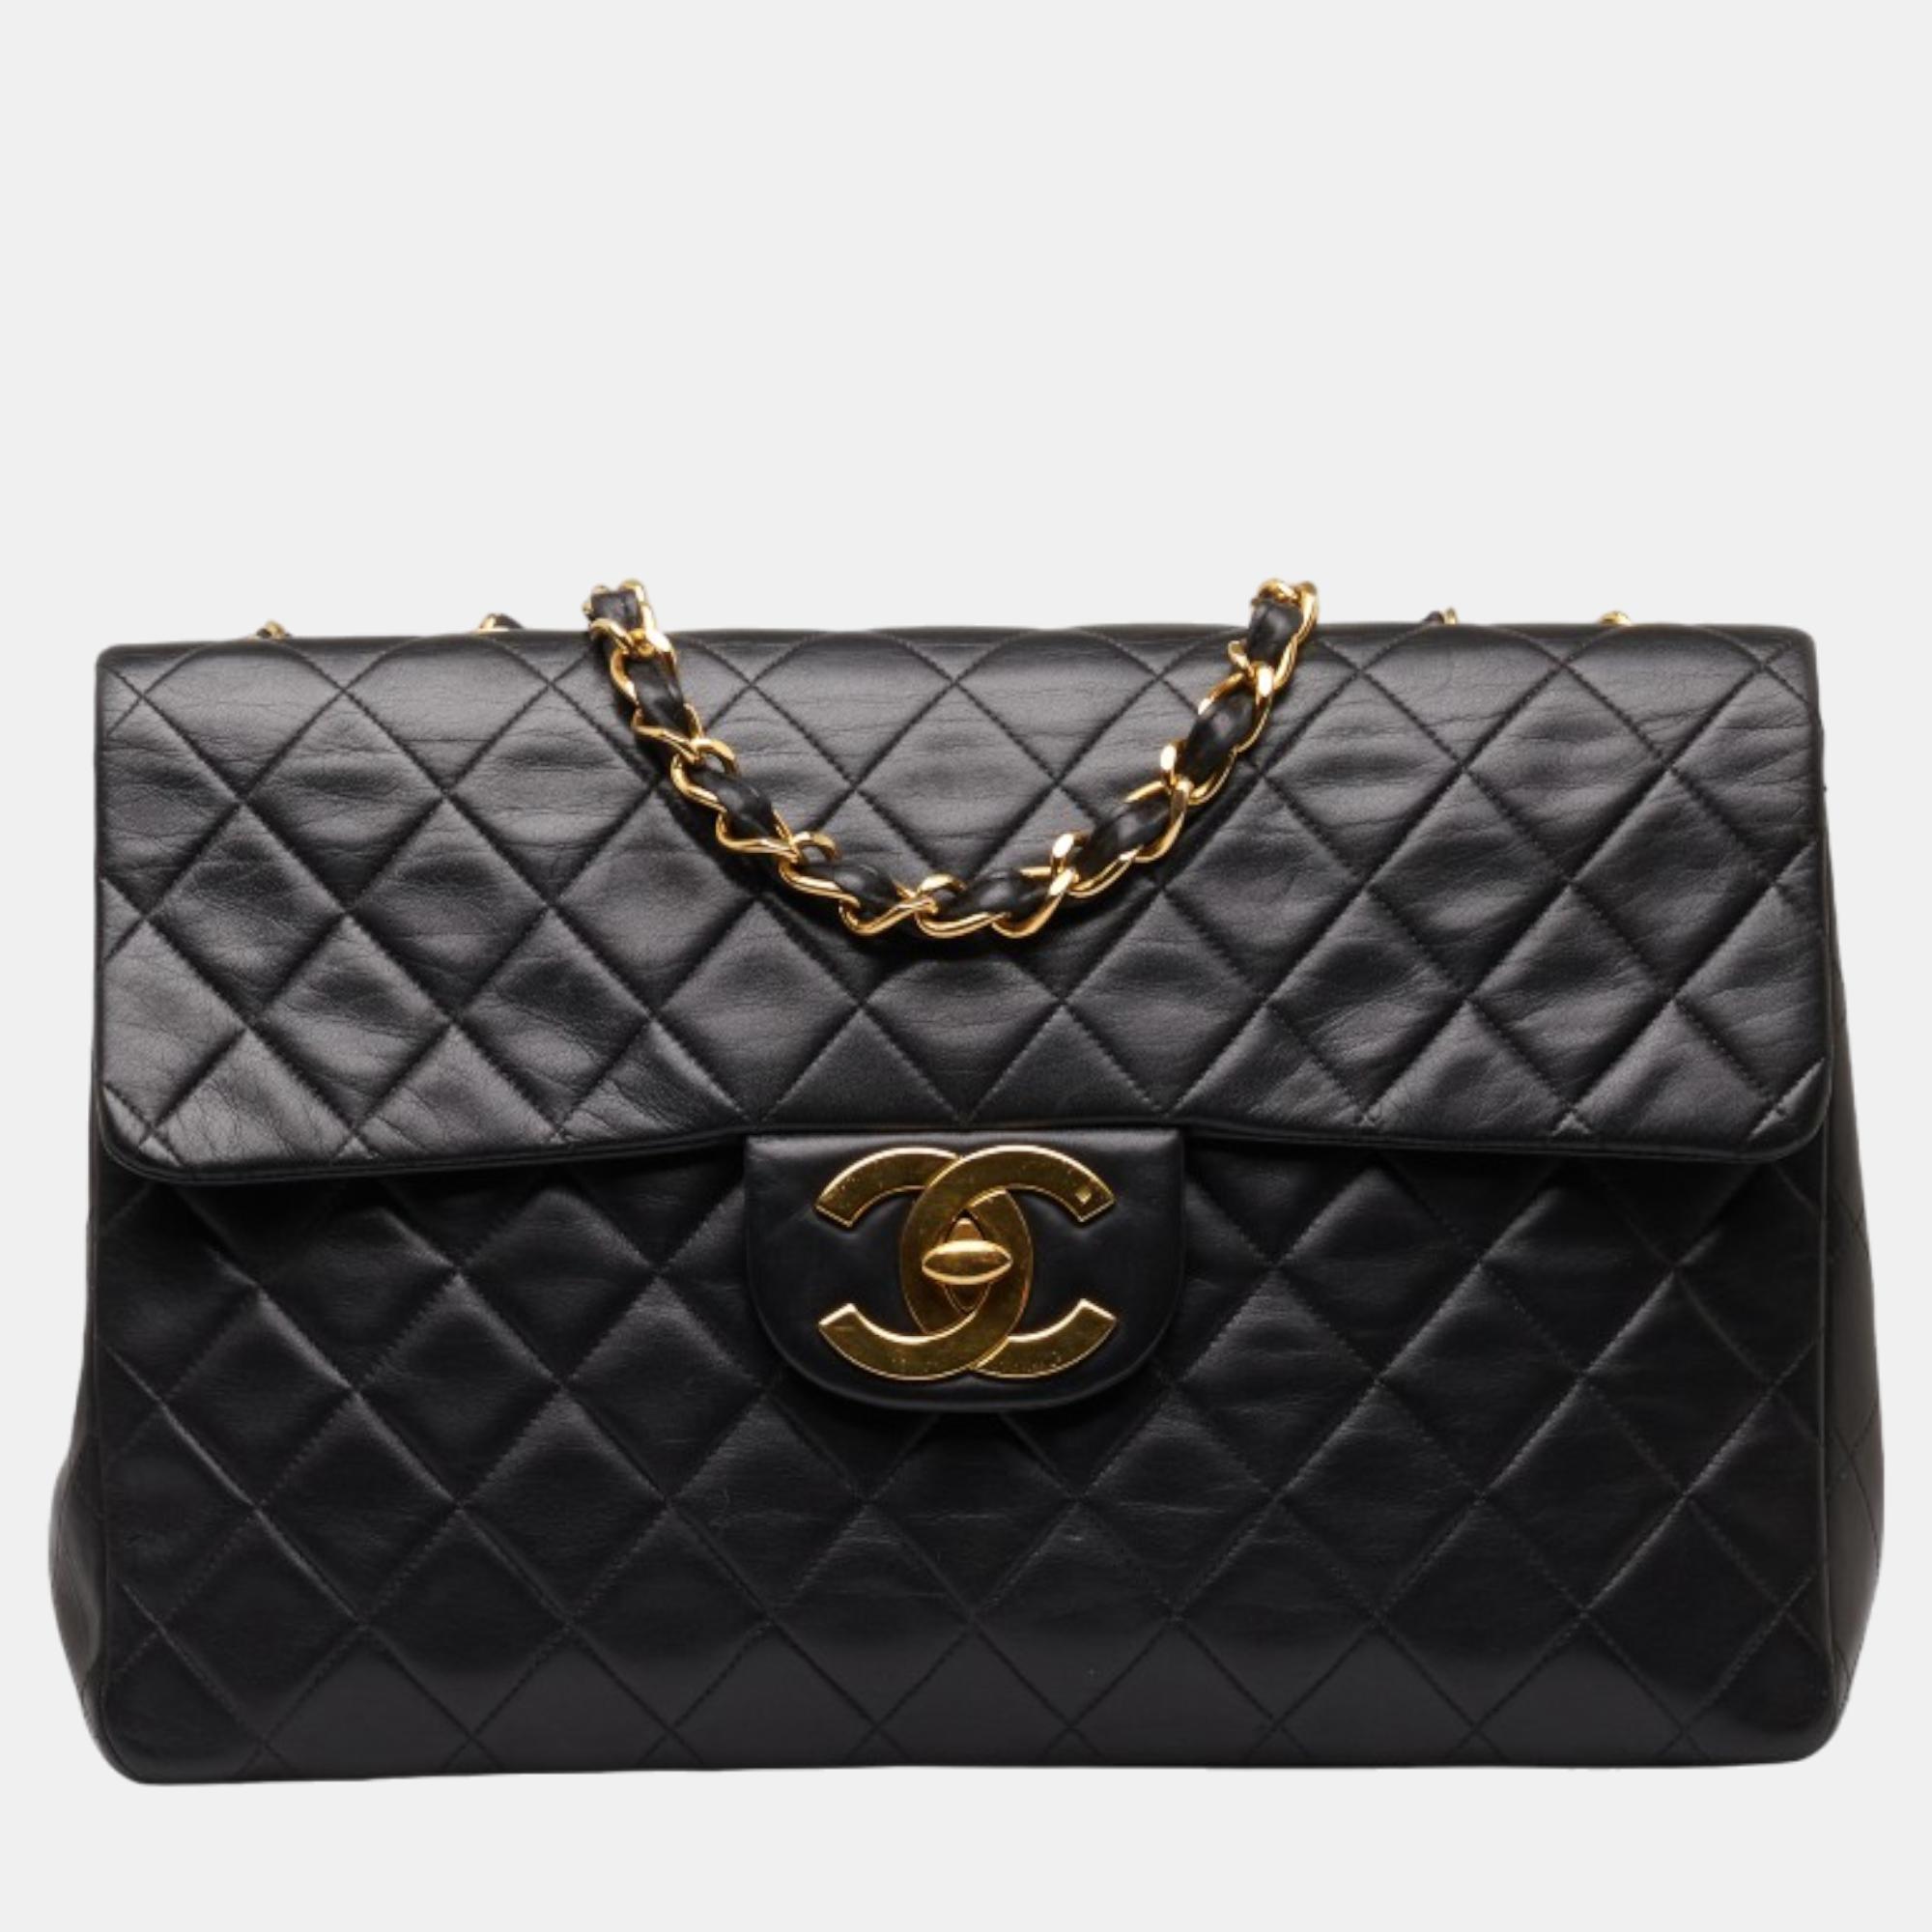 Chanel black lambskin leather large classic single flap shoulder bag